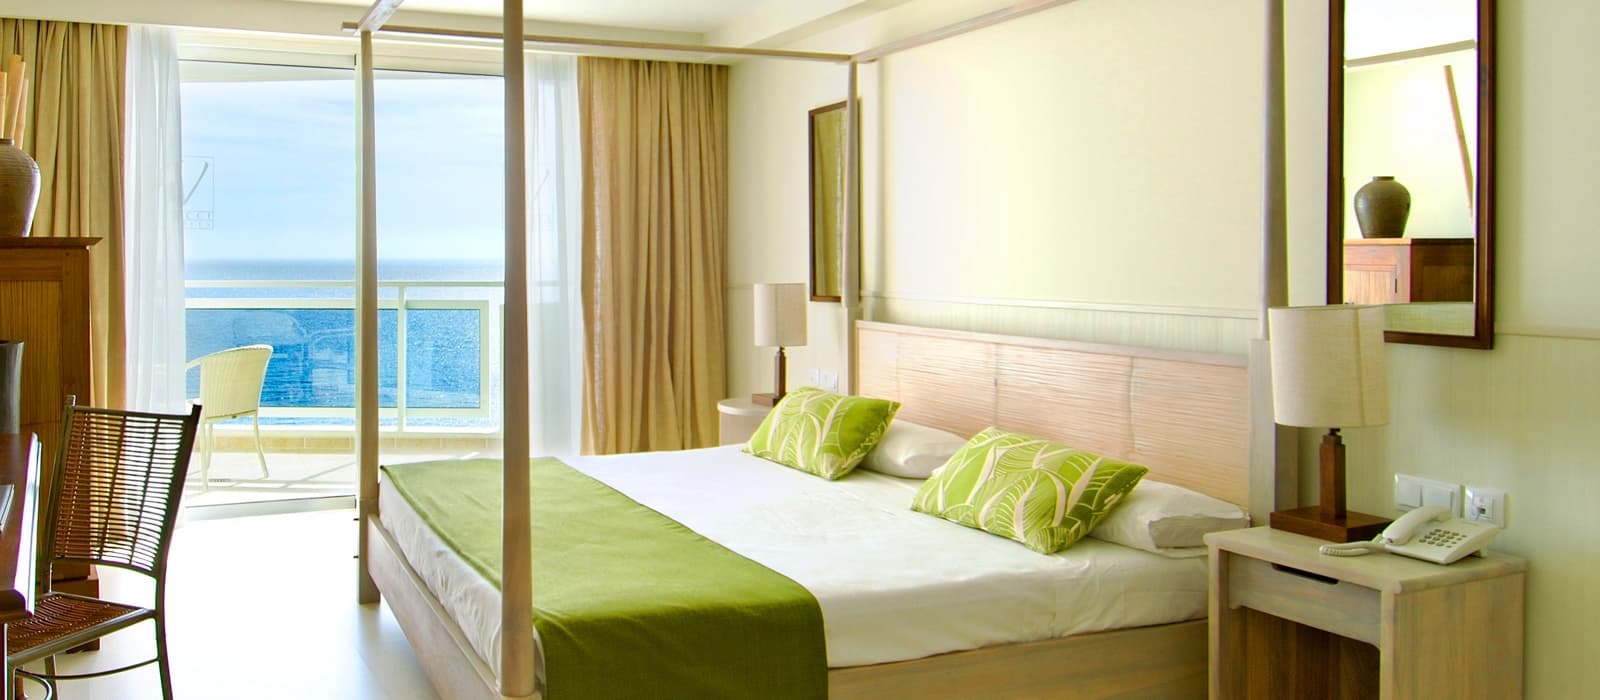 Hotel Tenerife Golf - Vincci Hotels